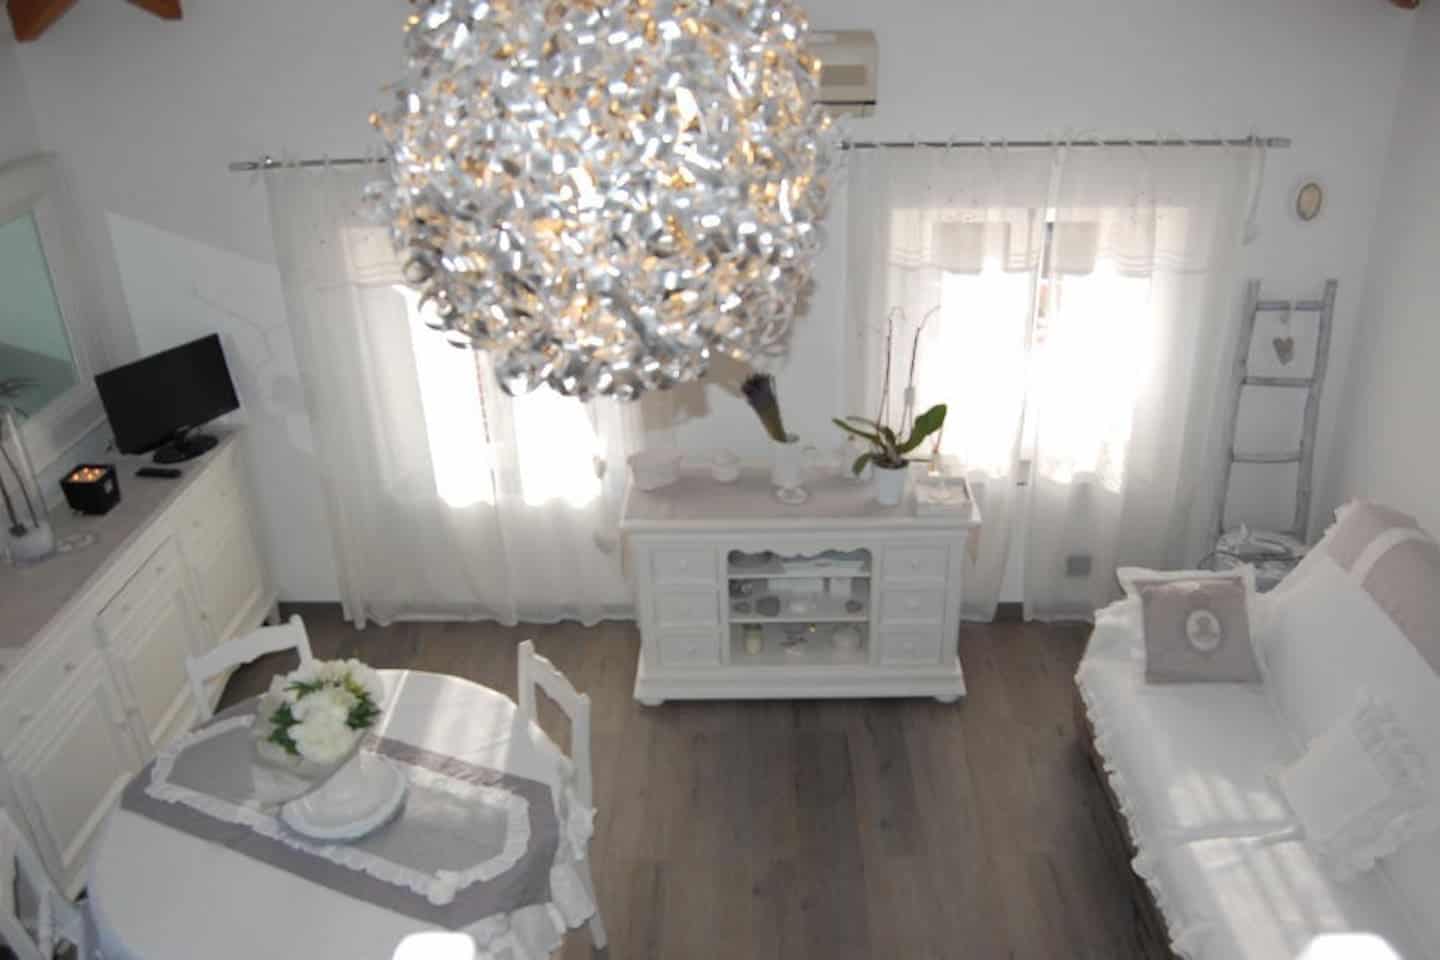 Image of Airbnb rental in Villefranche-sur-Mer, France